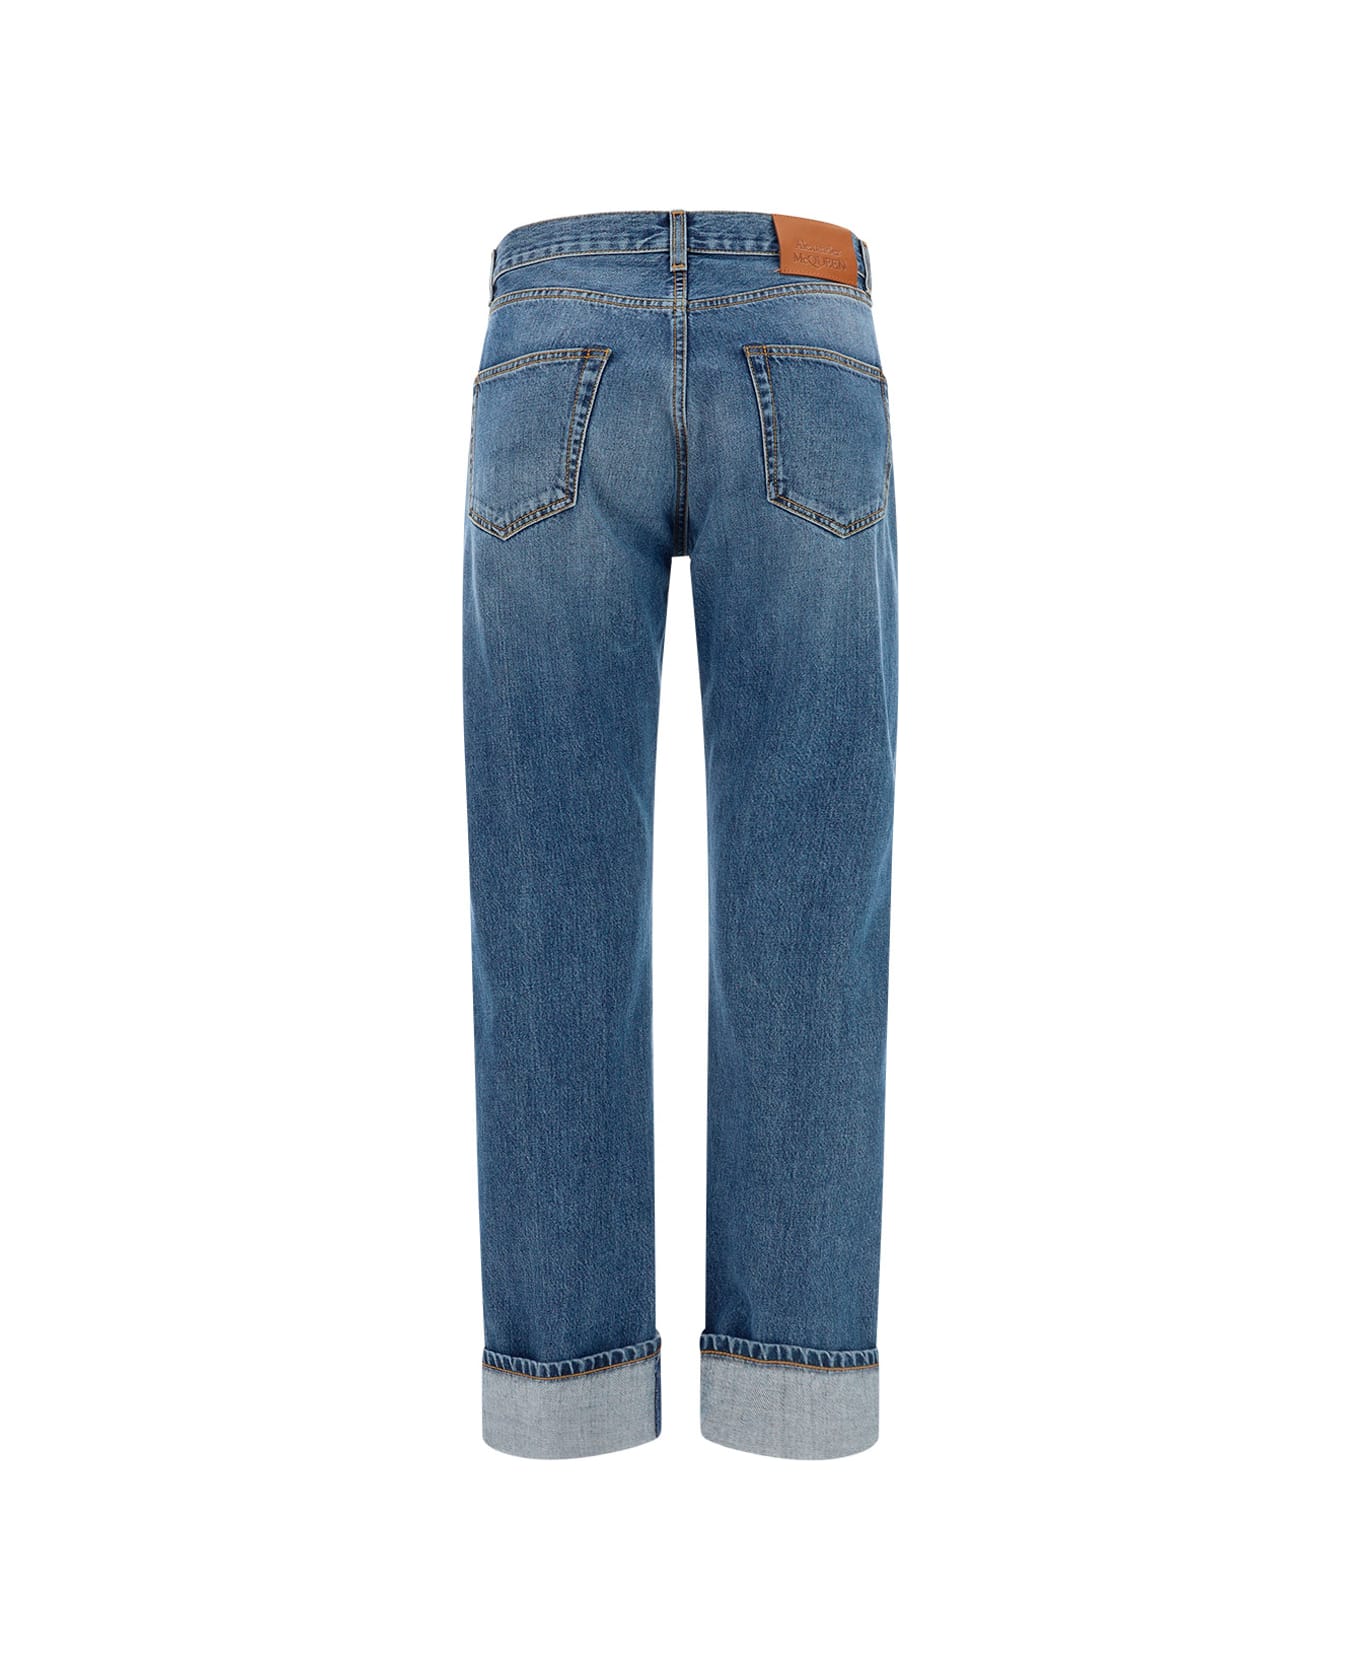 Alexander McQueen Five Pocket Jeans - Blue Washed デニム